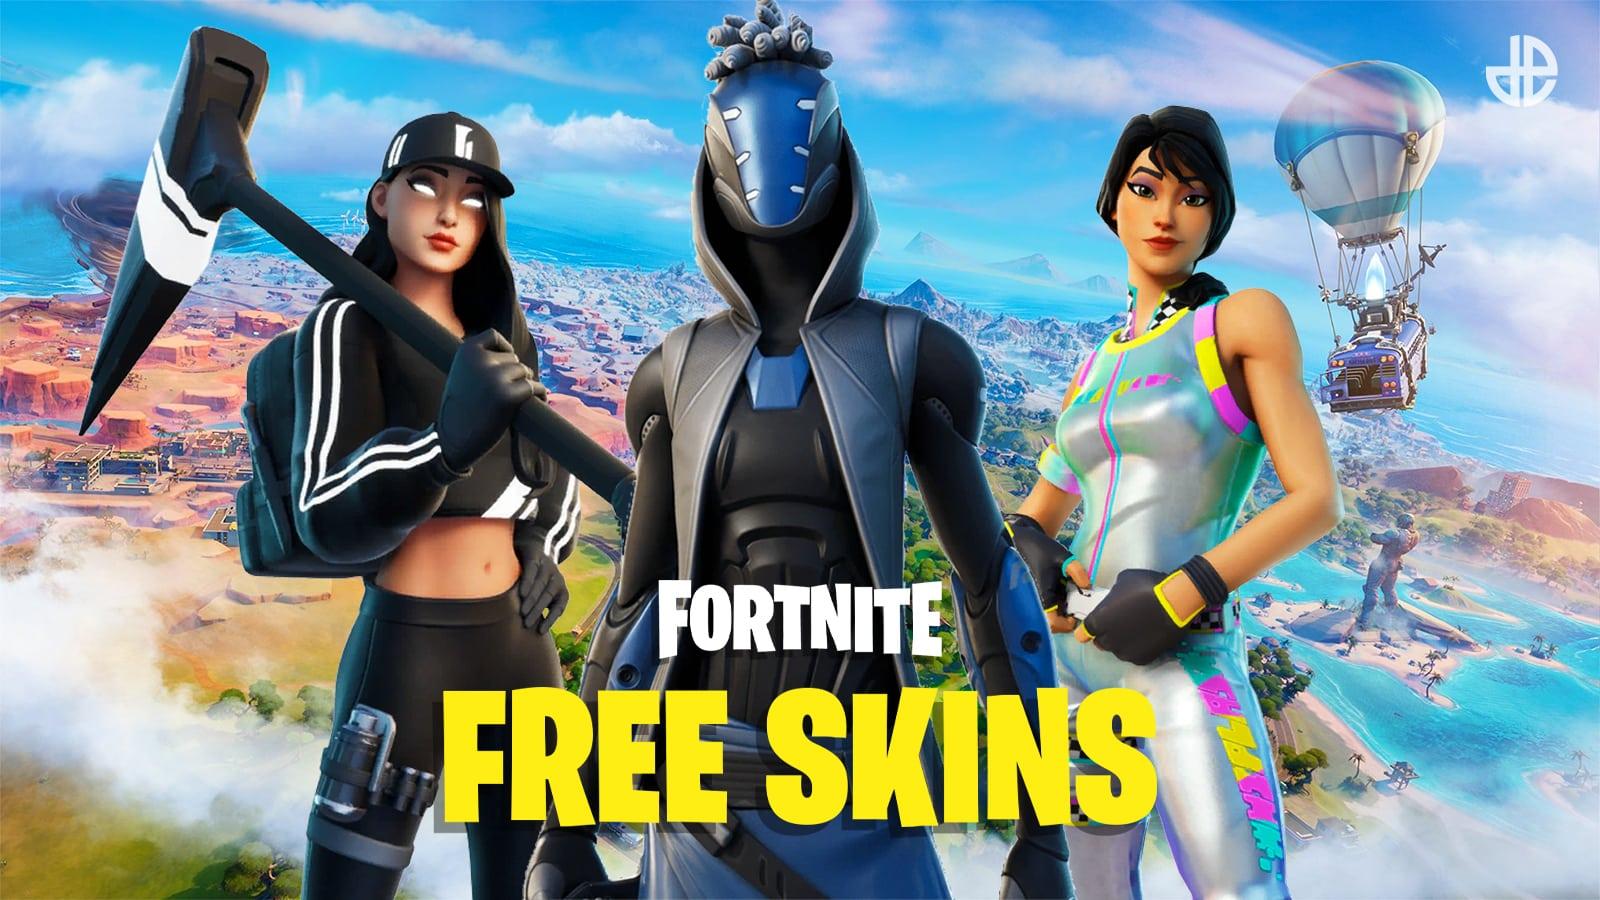 Three Fortnite characters alongside the text 'Free Fortnite Skins'